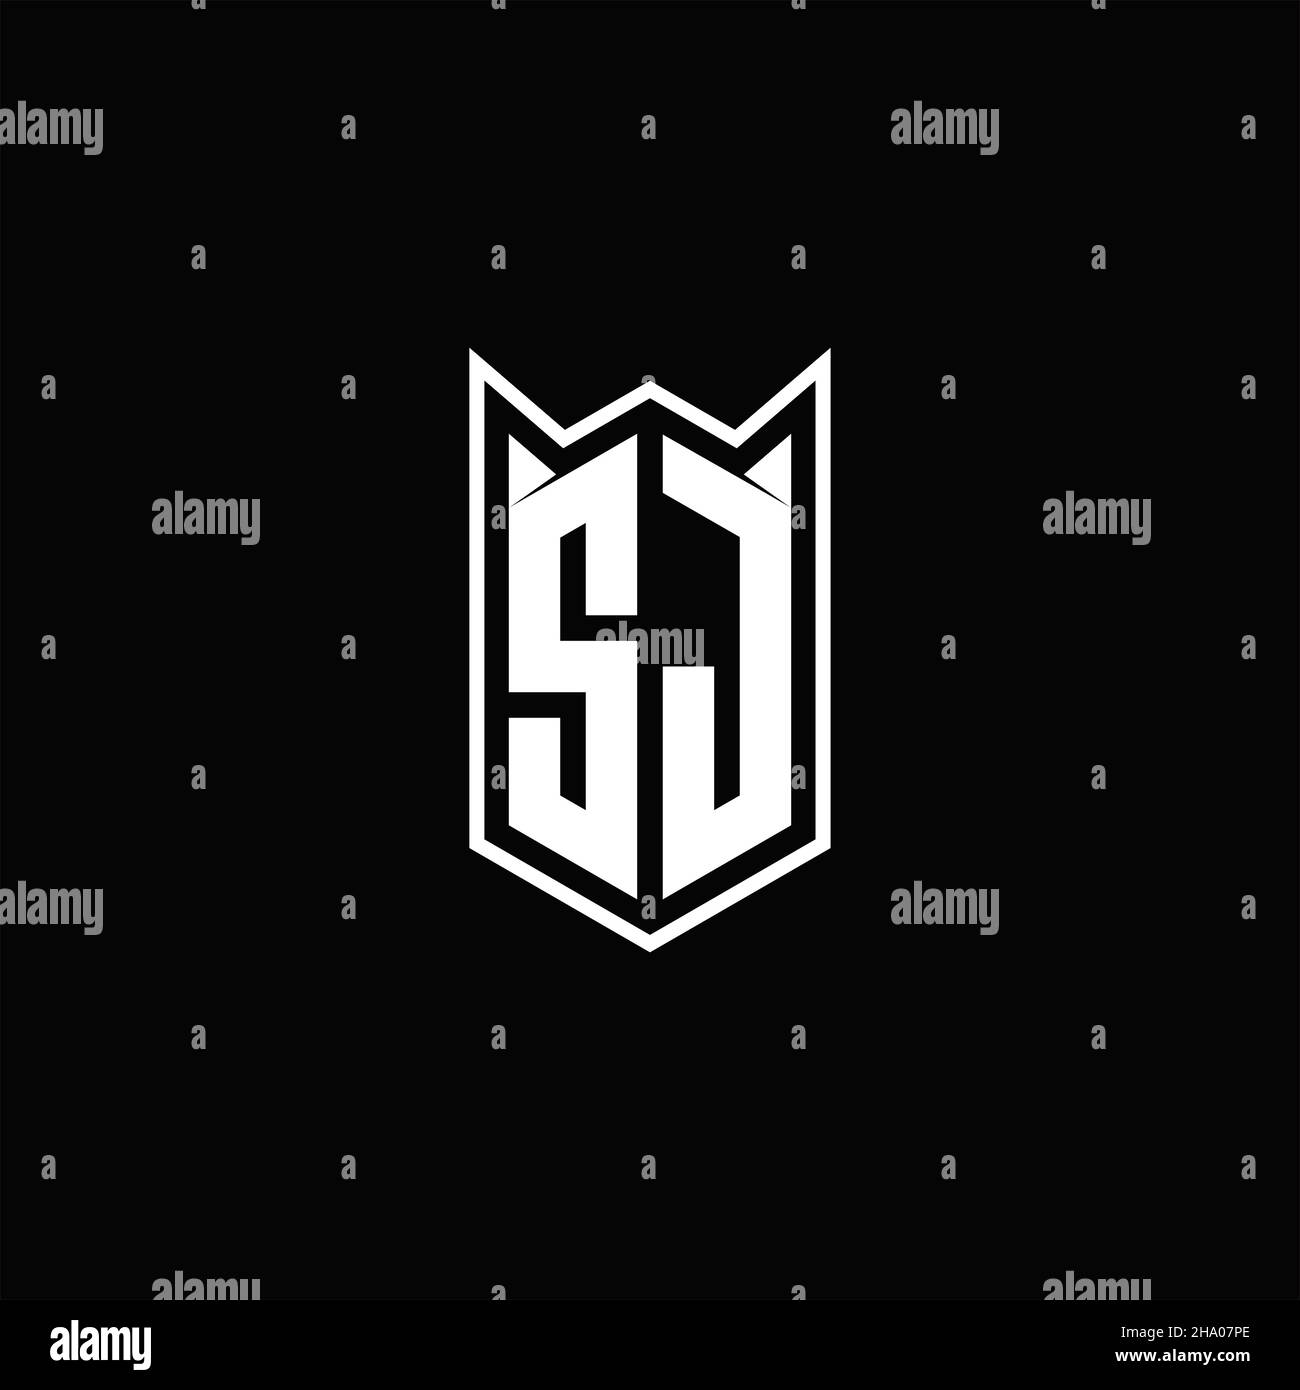 SJ Logo monogram with shield shape designs template vector icon modern Stock Vector